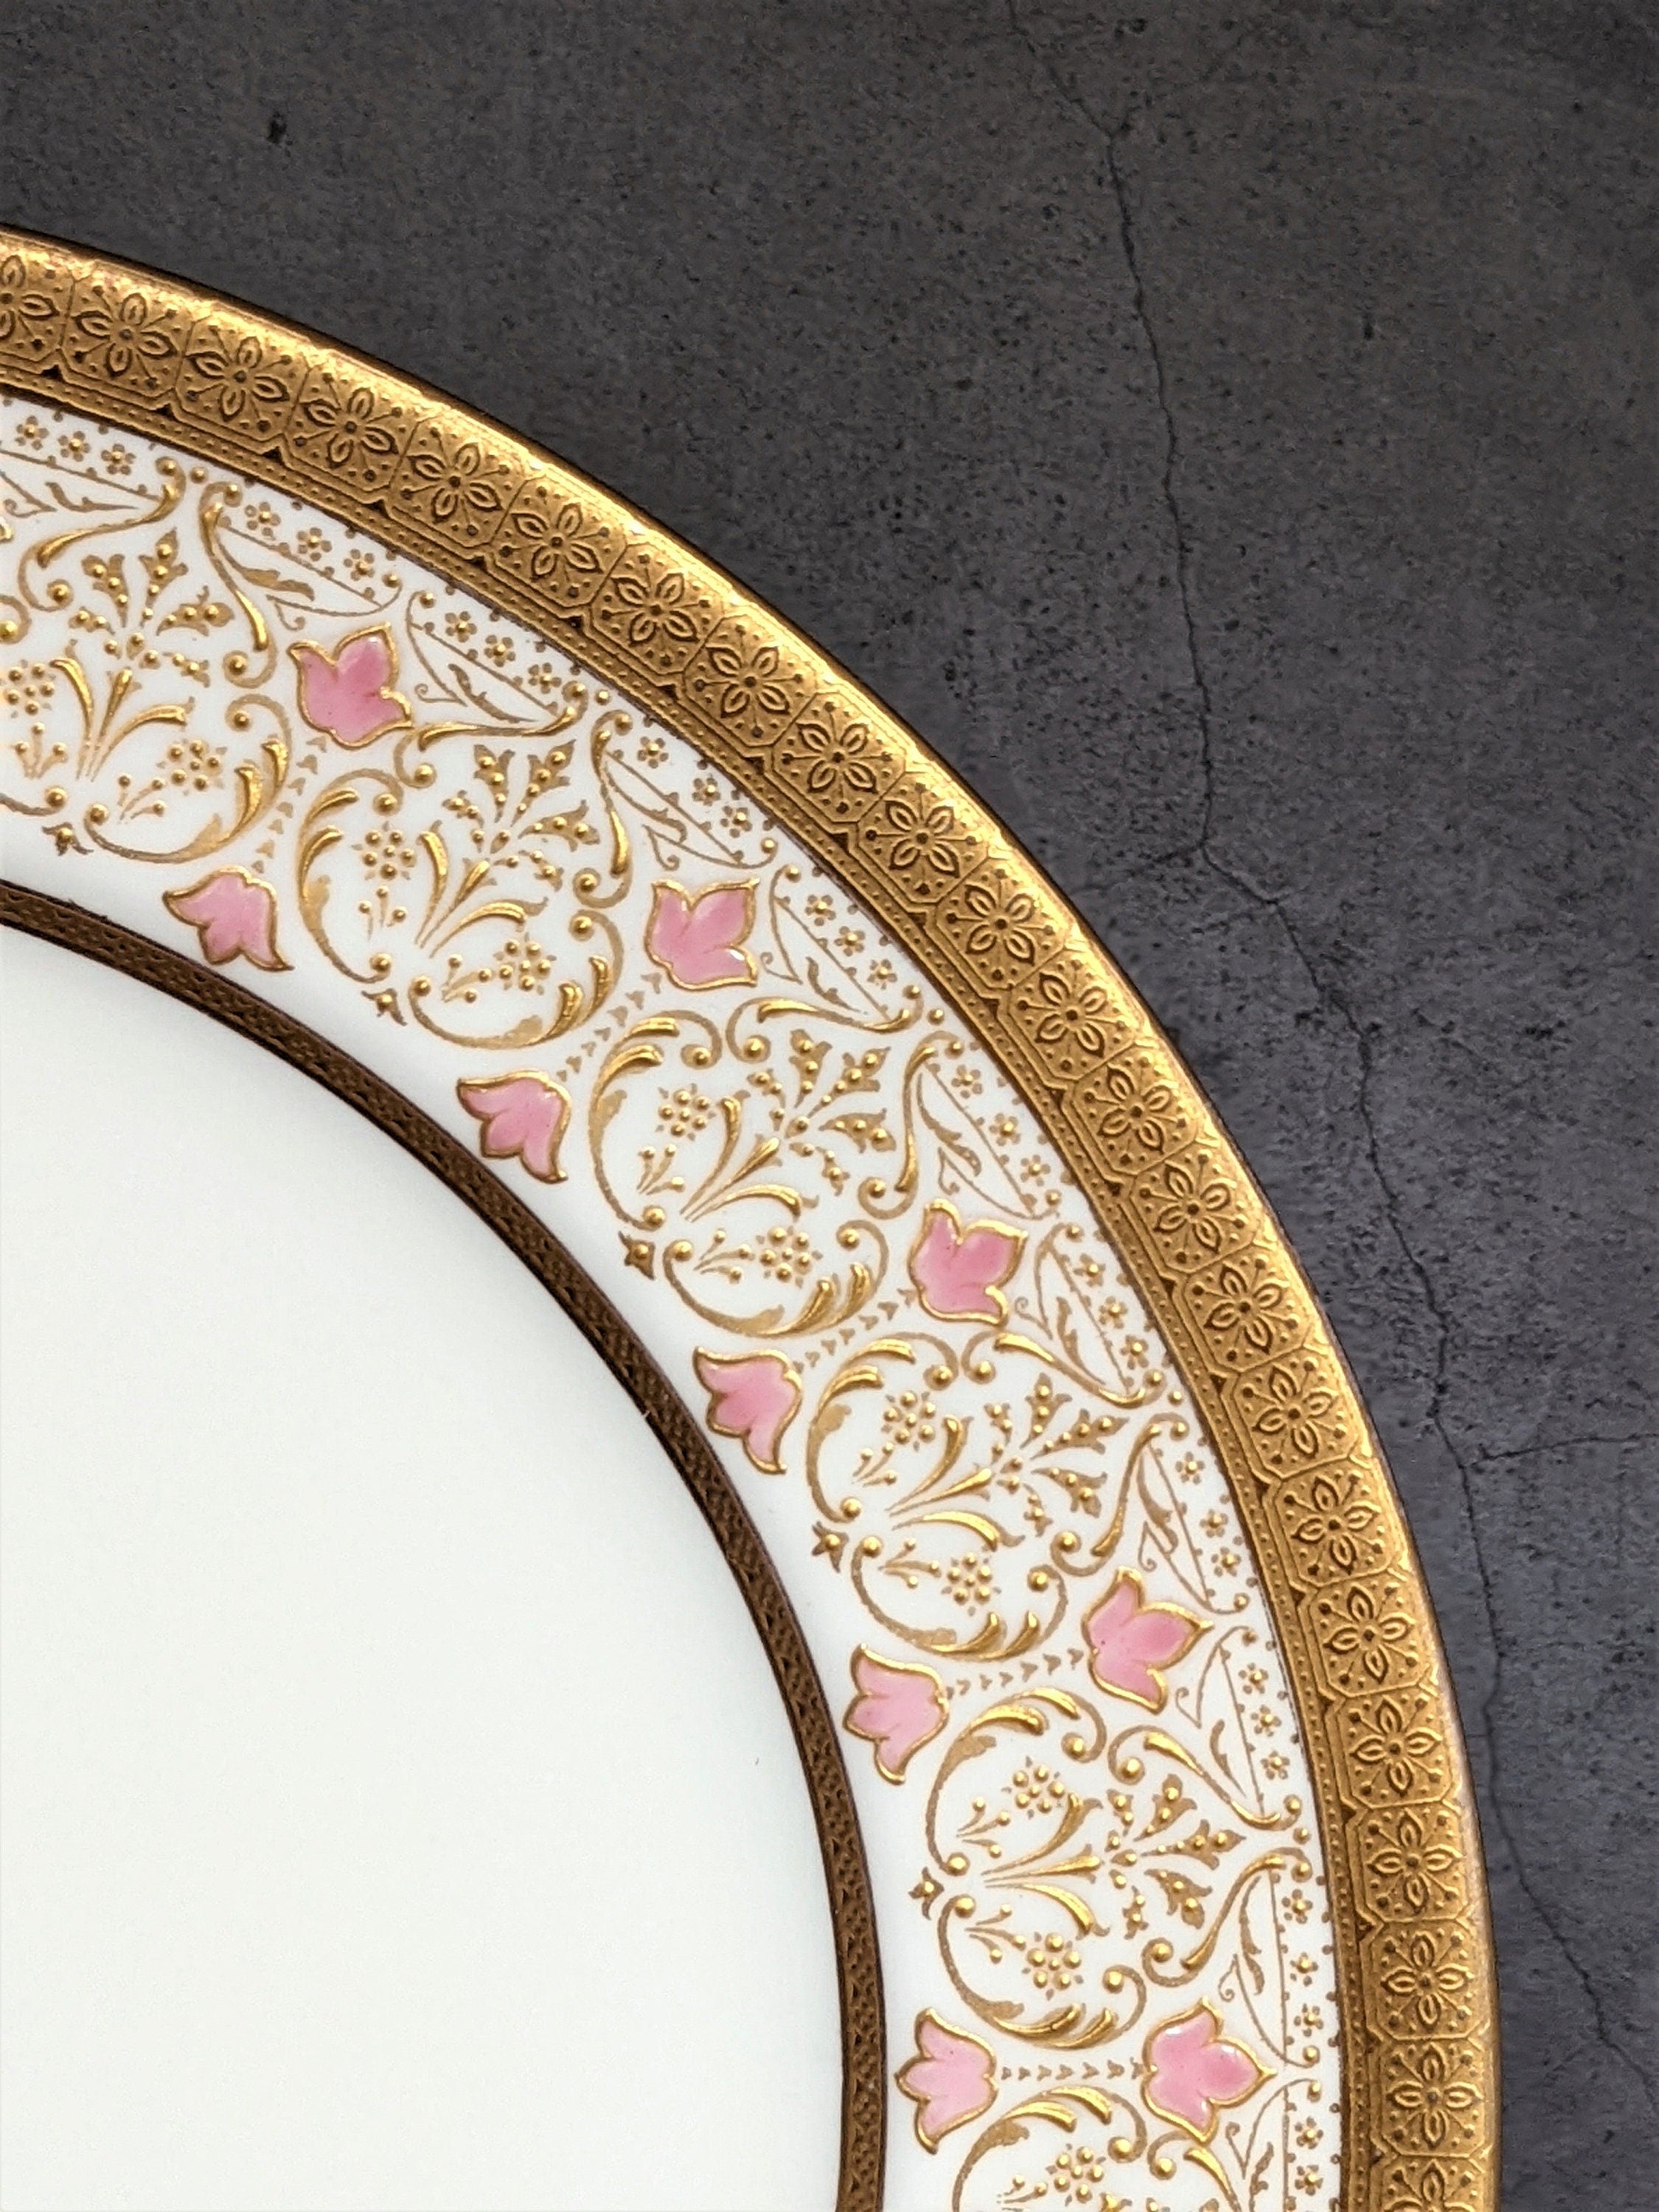 Antique Royal Doulton Plate, Raised Gold, Pink Enamel, 10.25